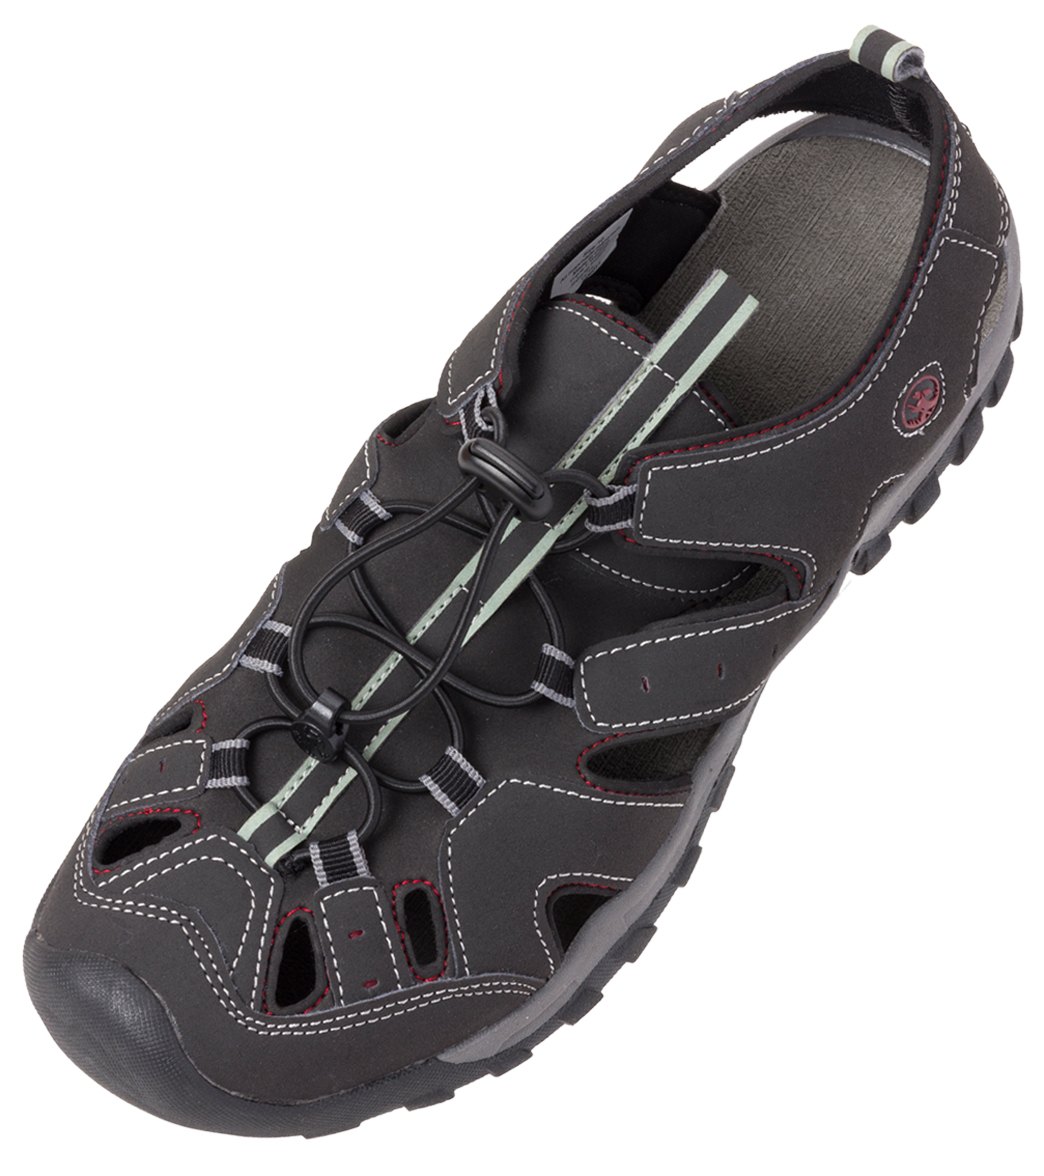 Northside Men's Burke Ii Water Shoes - Black/Red 8 - Swimoutlet.com